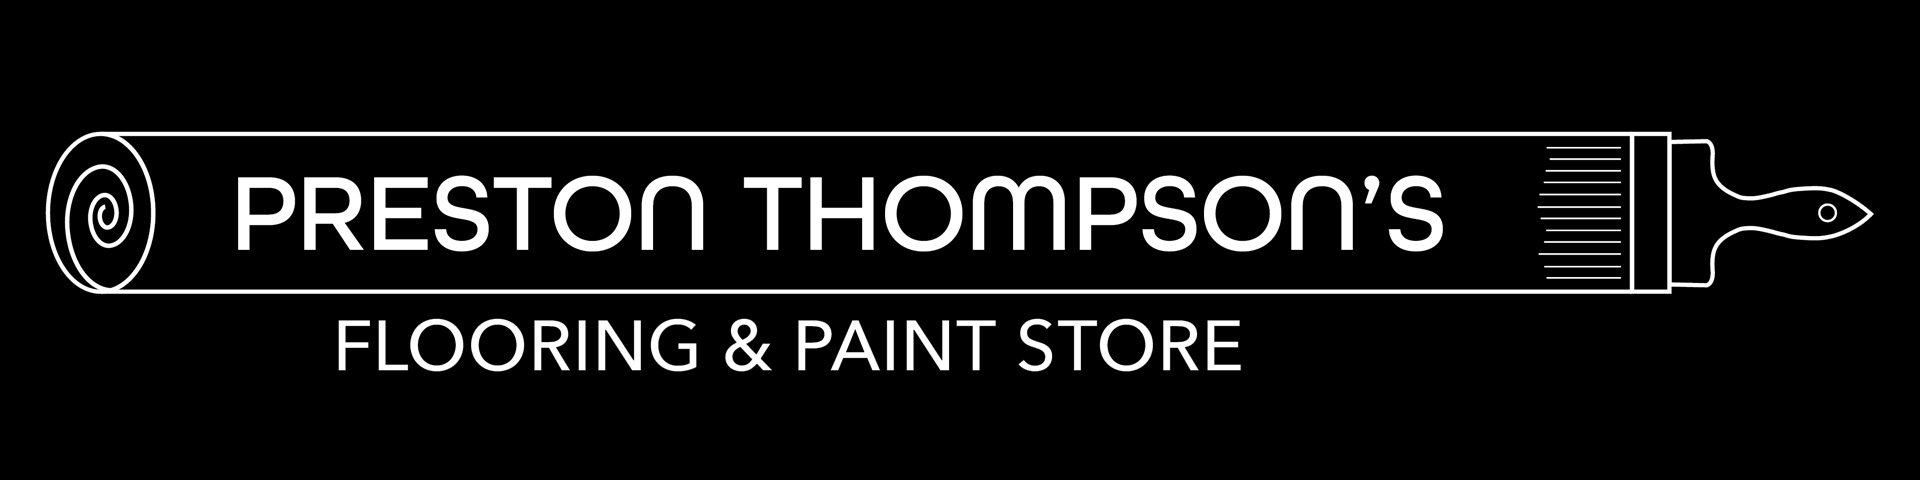 Preston Thompson Flooring & Paint store in Dickson, TN carries Benjamin Moore paints